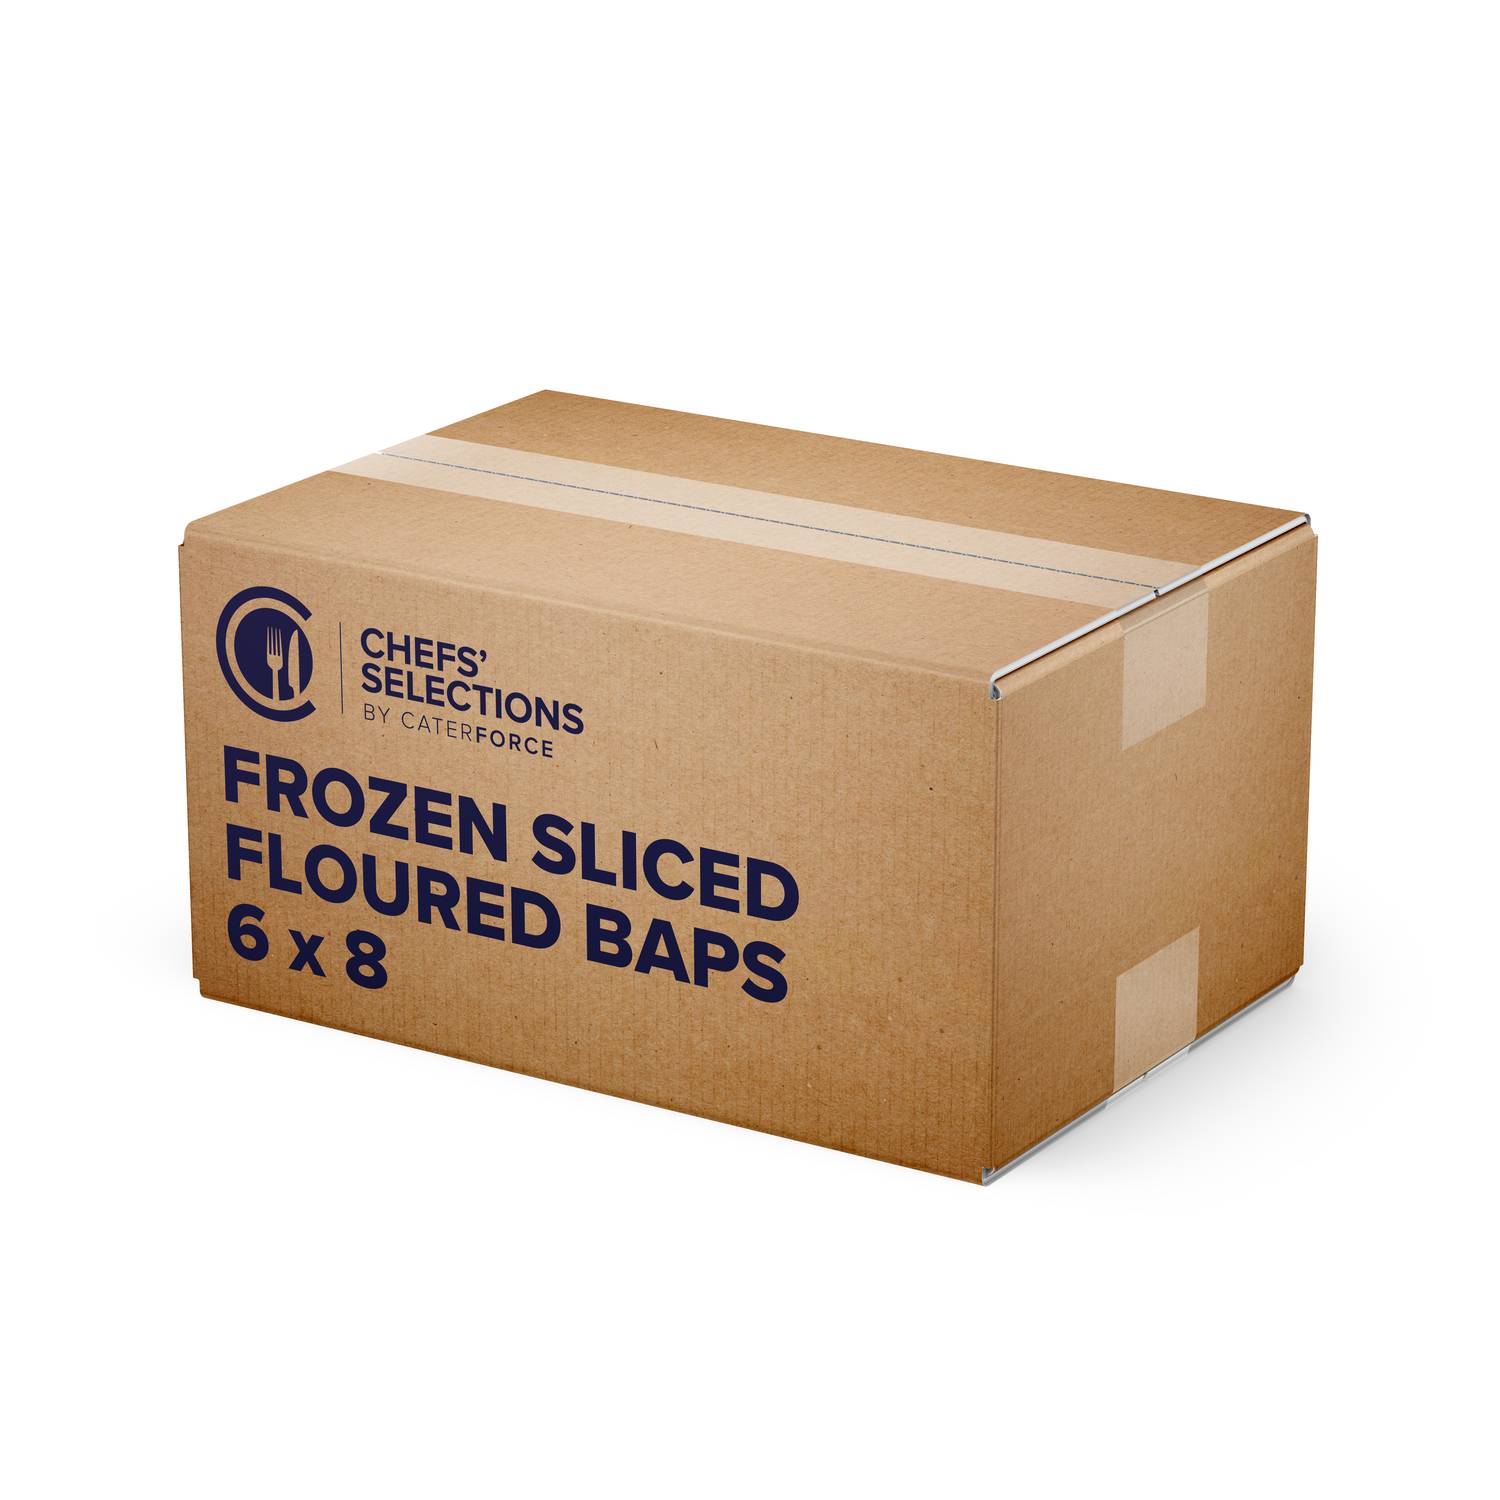 Chefs’ Selections Frozen 5″ Sliced Floured Bap (6 x 8)